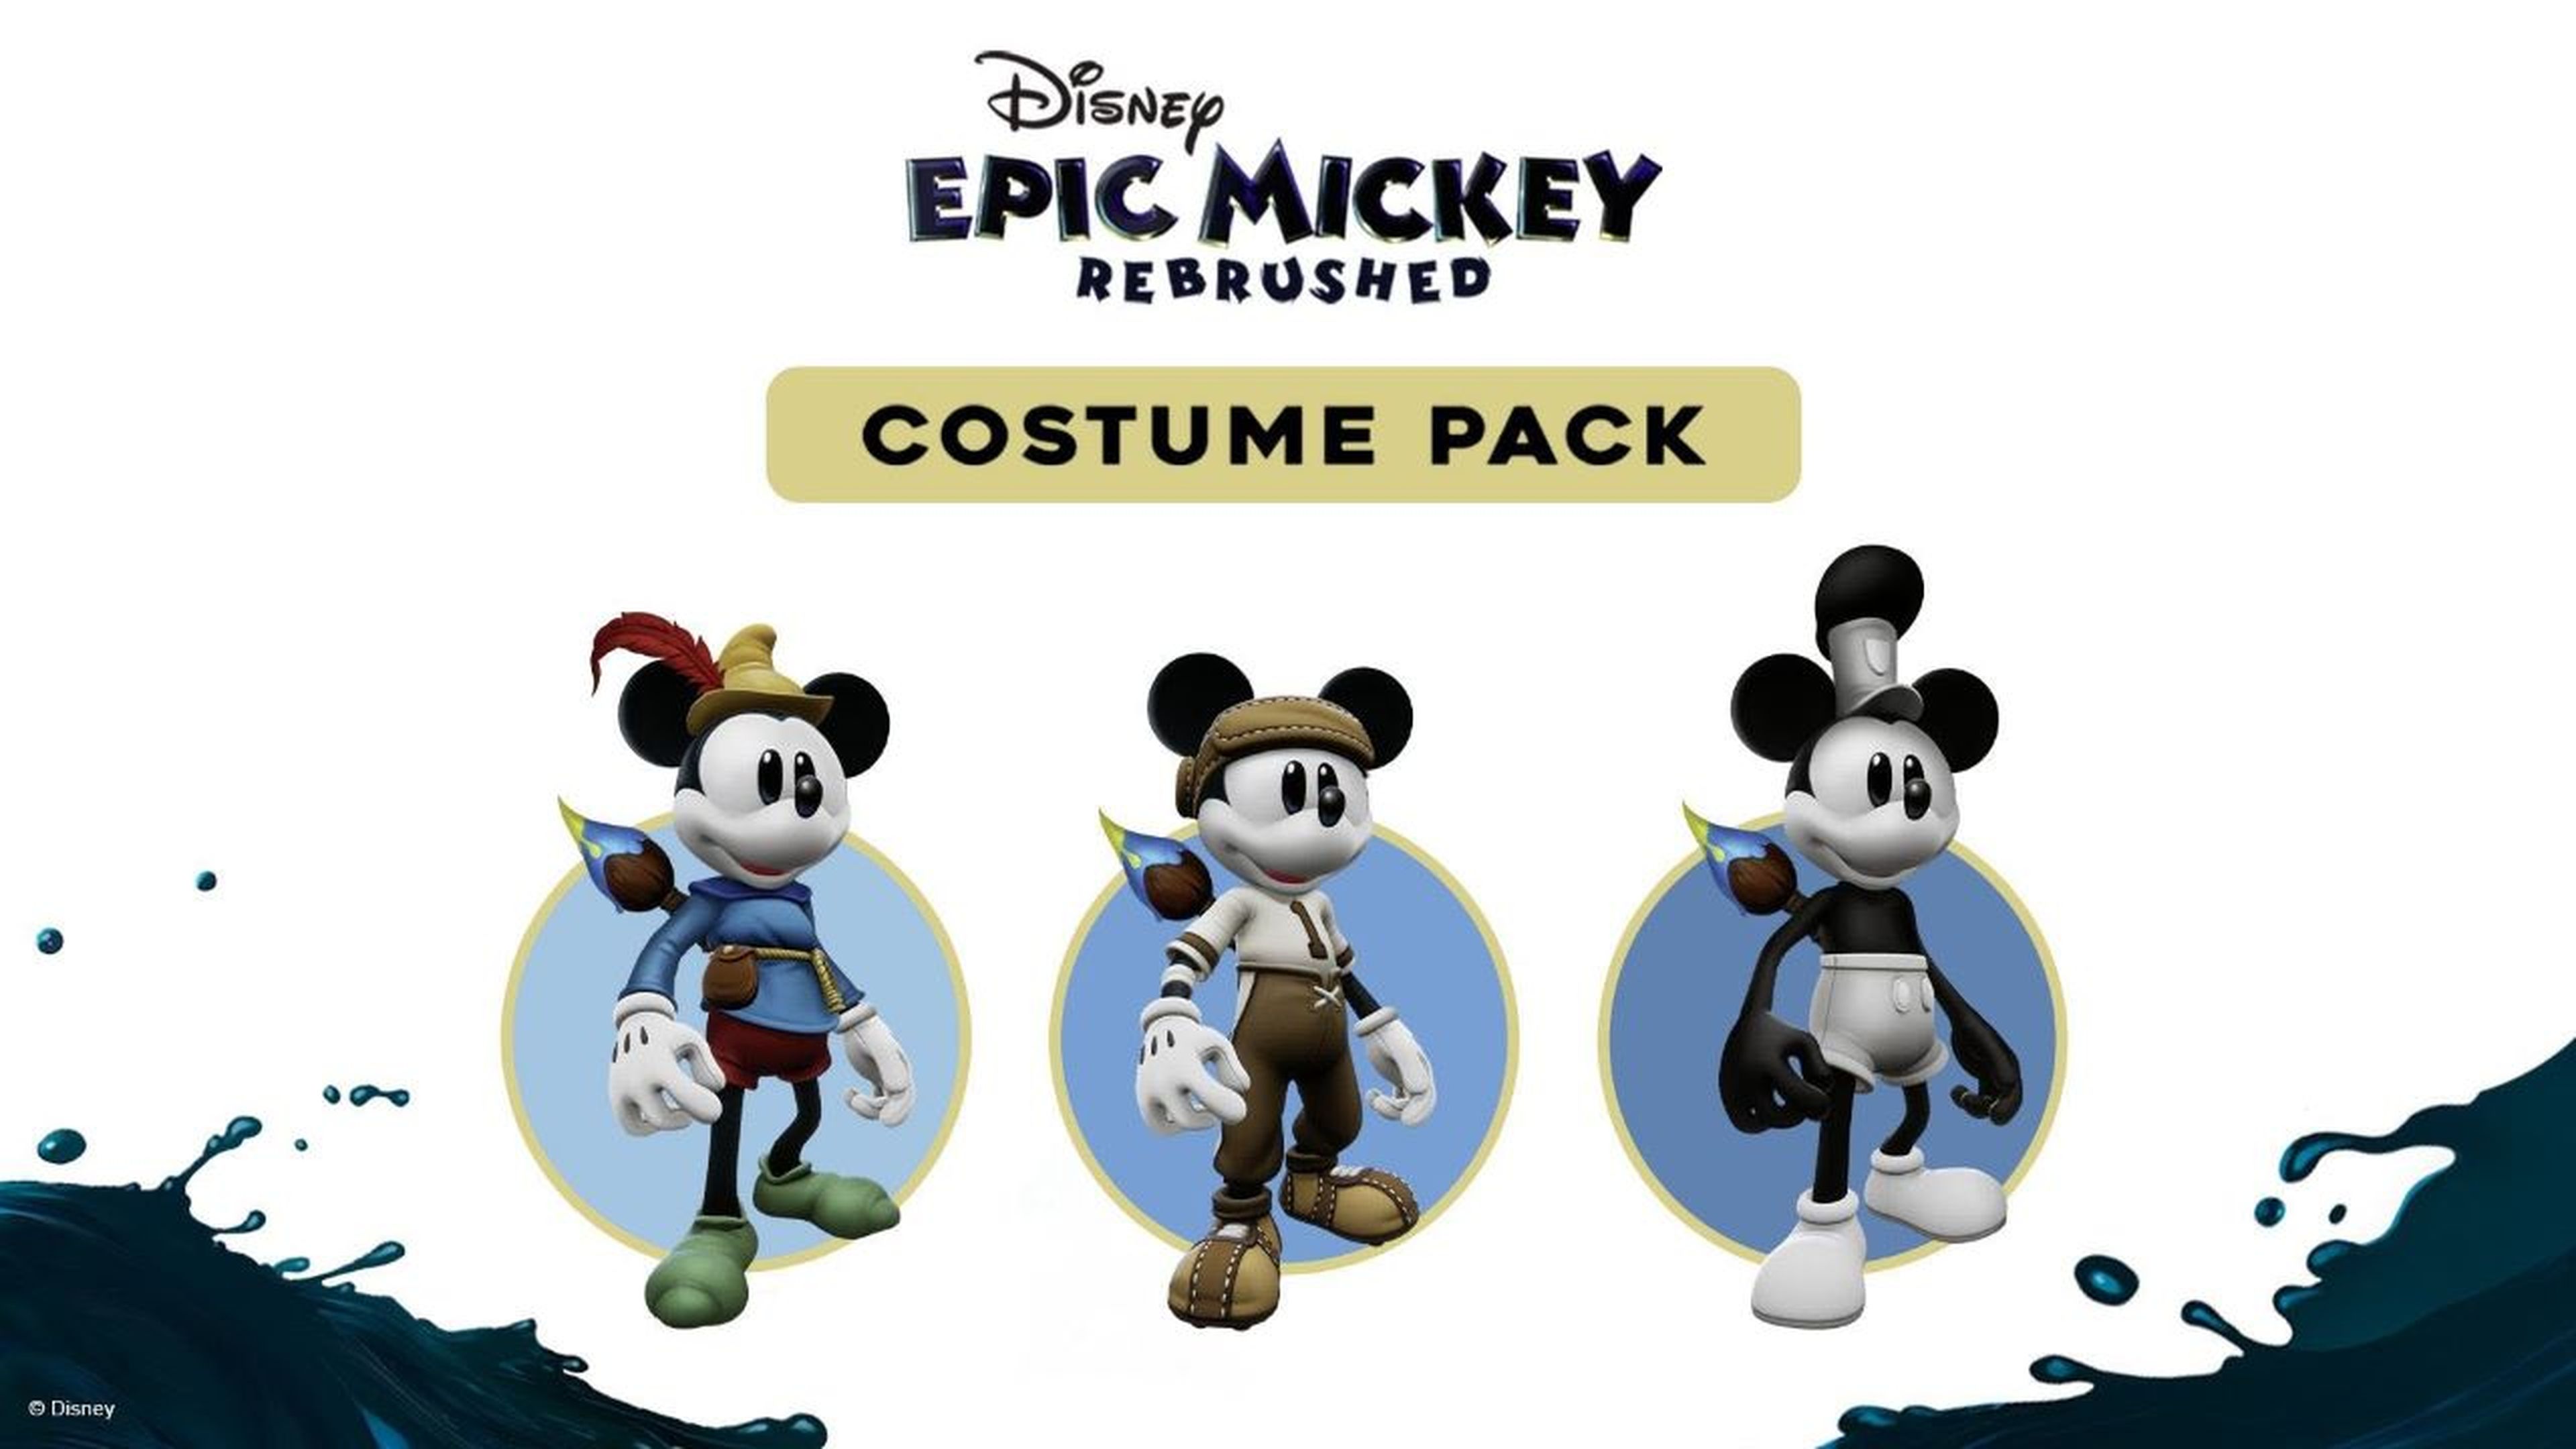 Epic Mickey Rebrushed incentivos por reserva